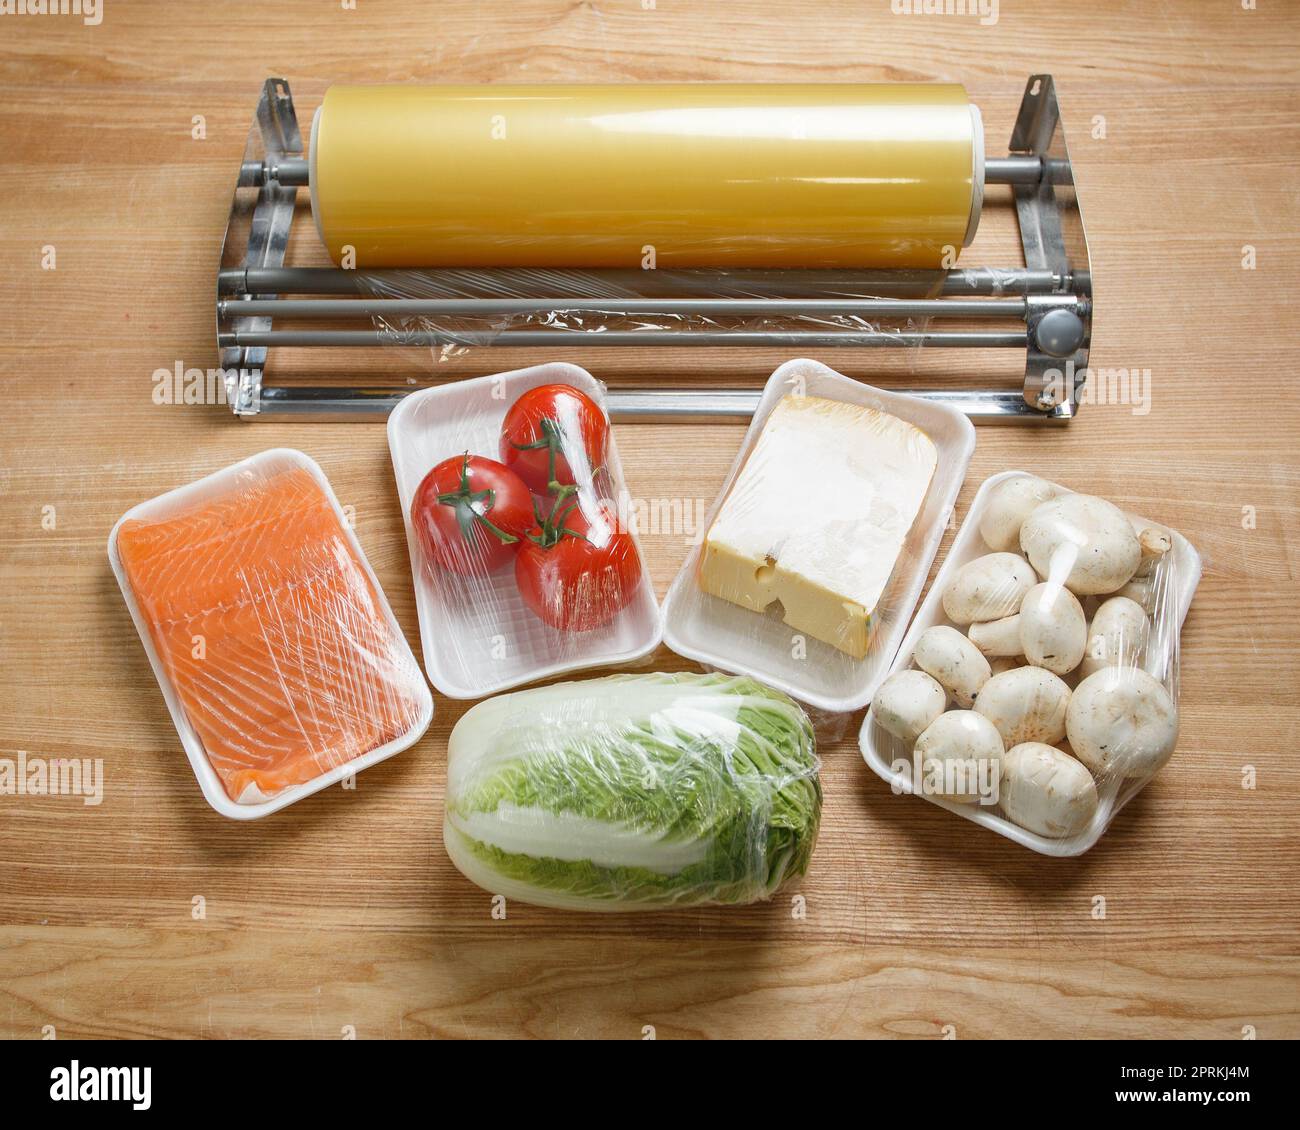 1 Roll Kitchen Clear PE Foil Cling Film Food Storage Plastic Wrap